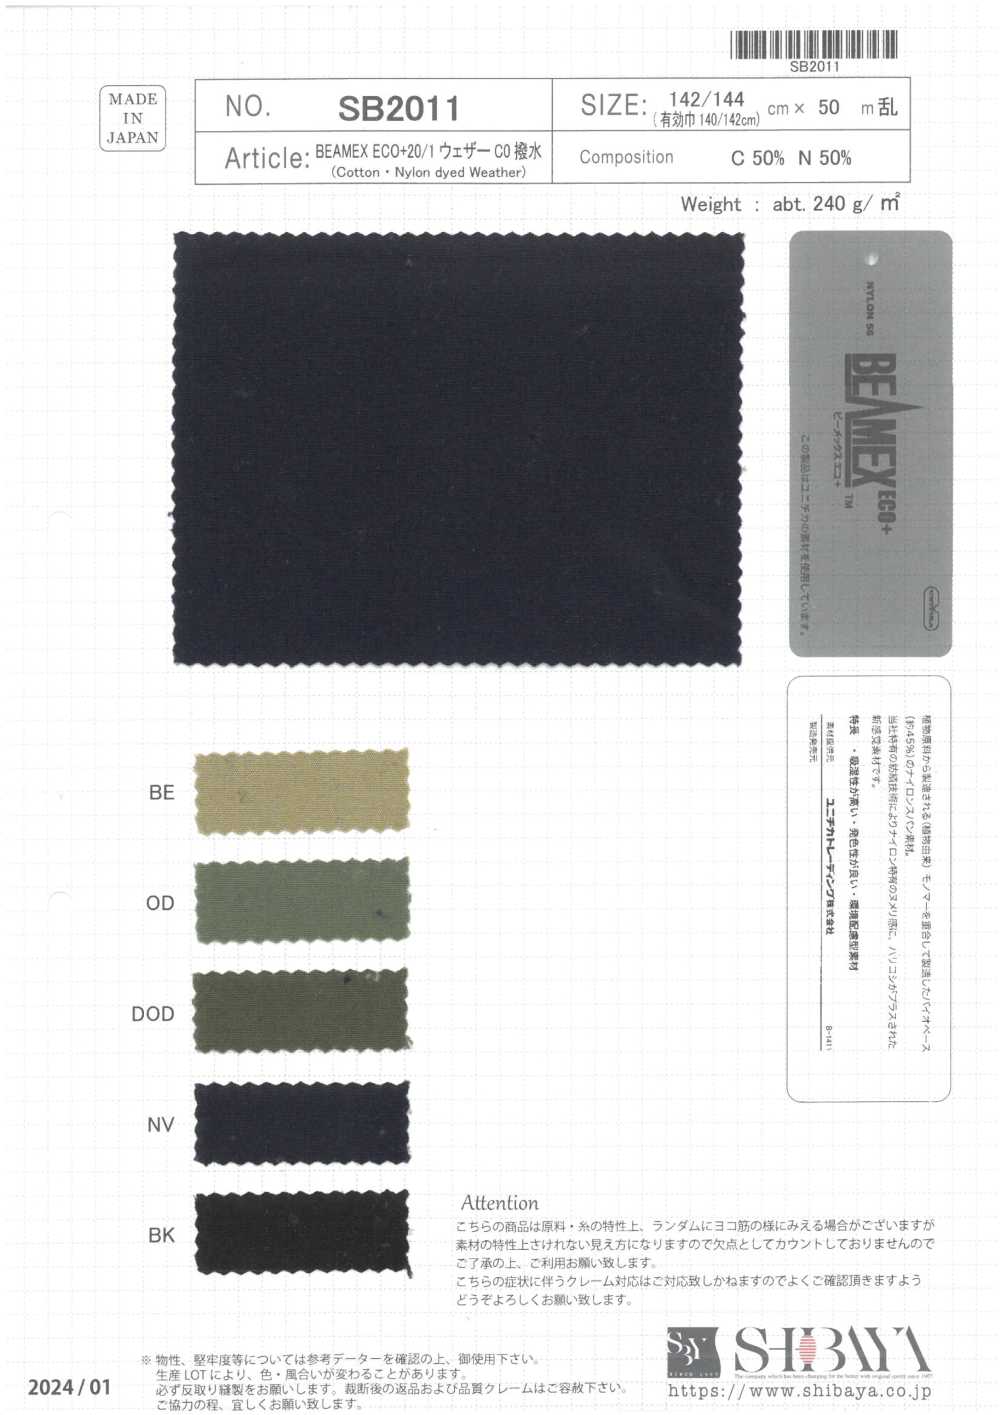 SB2011 BEAMEX ECO+20/1 Weather Cloth C0 Repelente Al Agua[Fabrica Textil] SHIBAYA